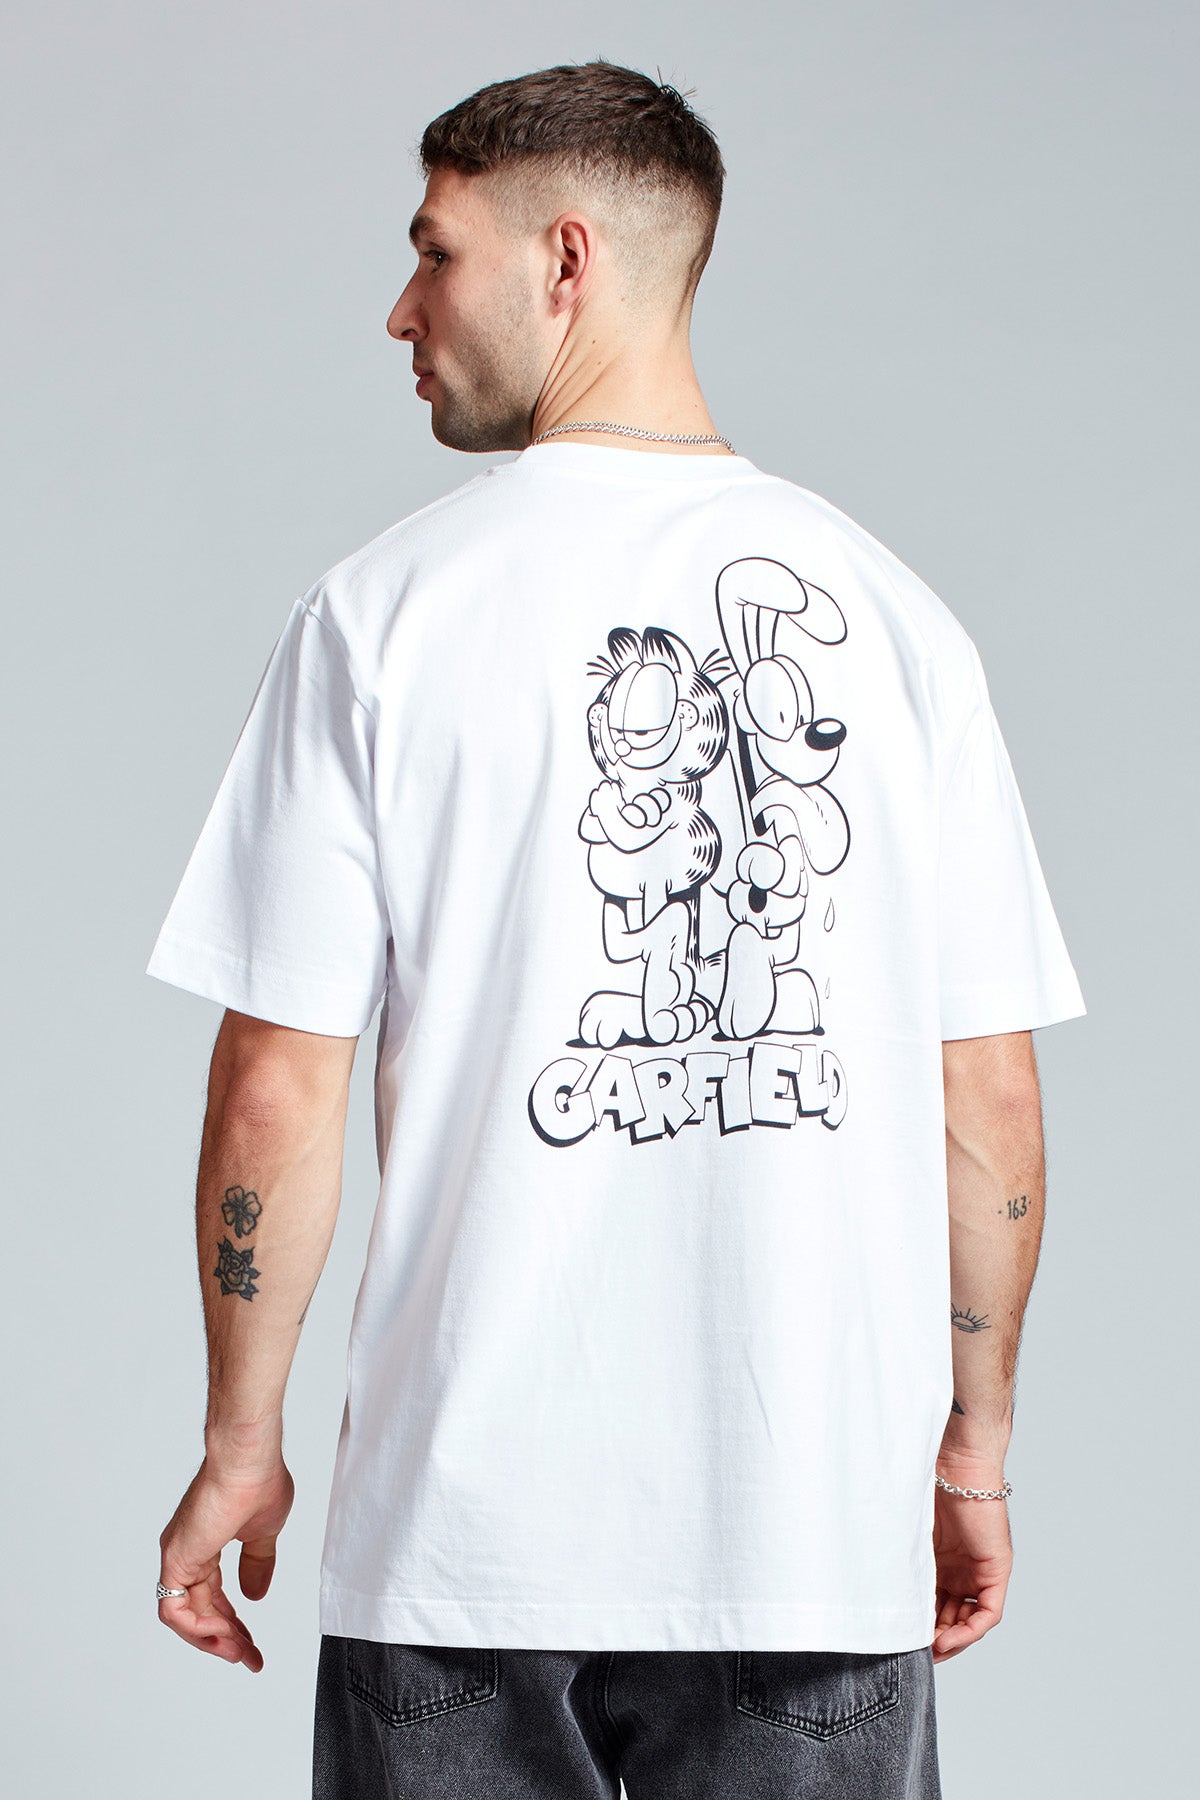 Garfield Buddies T-shirt in White